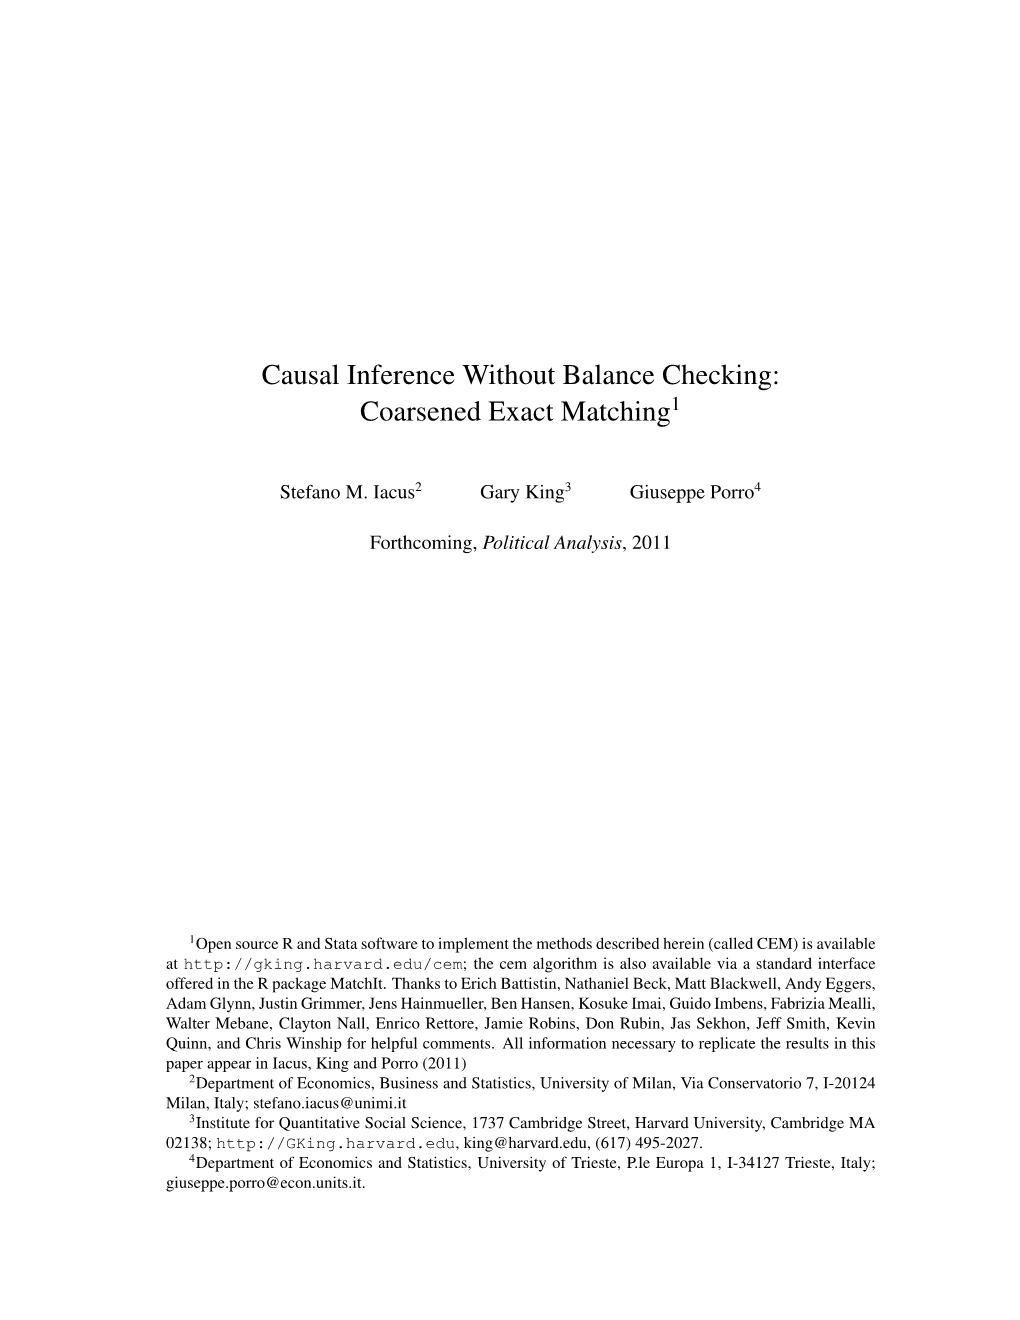 Causal Inference Without Balance Checking: Coarsened Exact Matching1